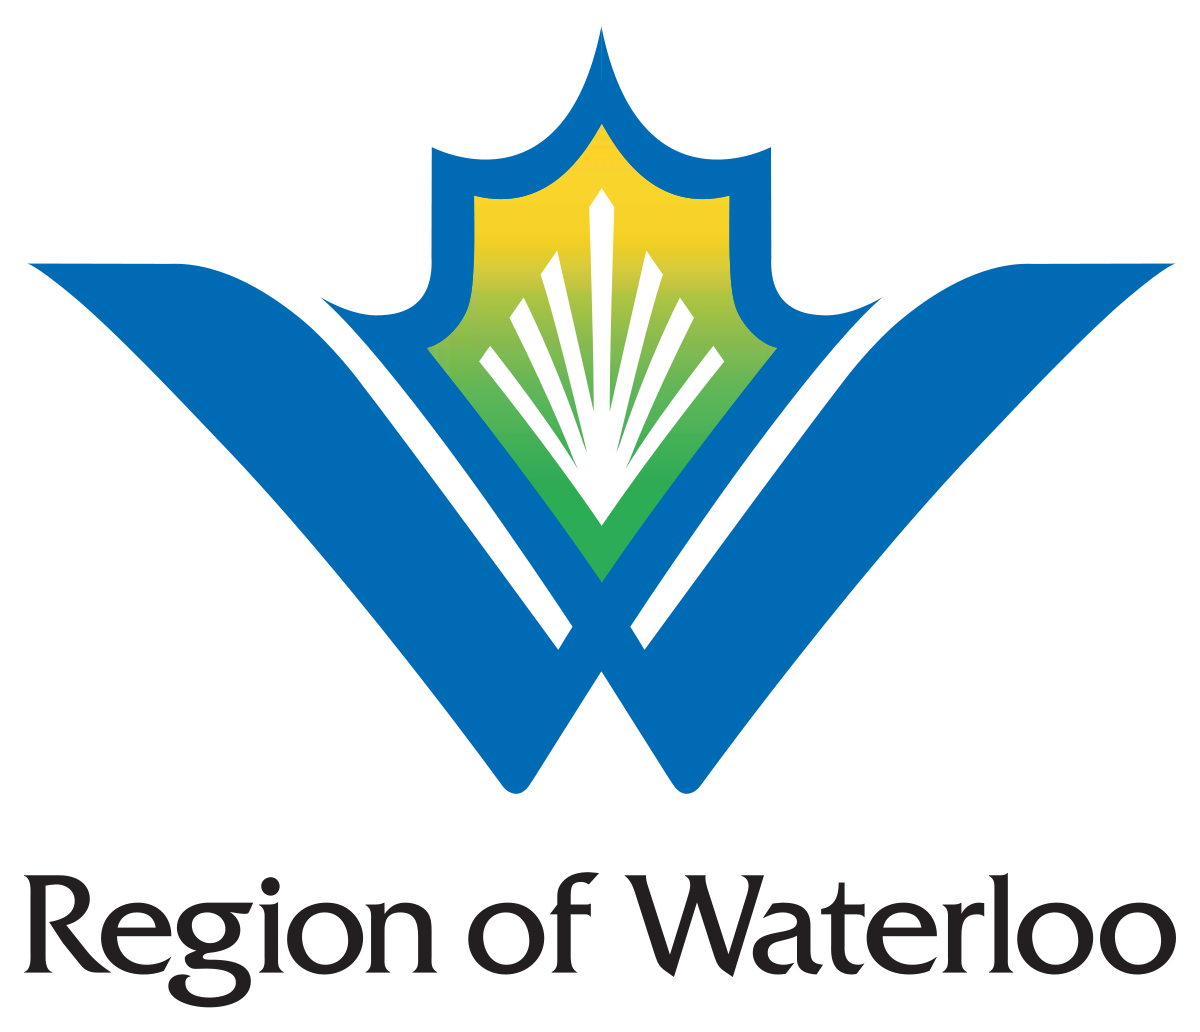 Logo Image for Region of Waterloo